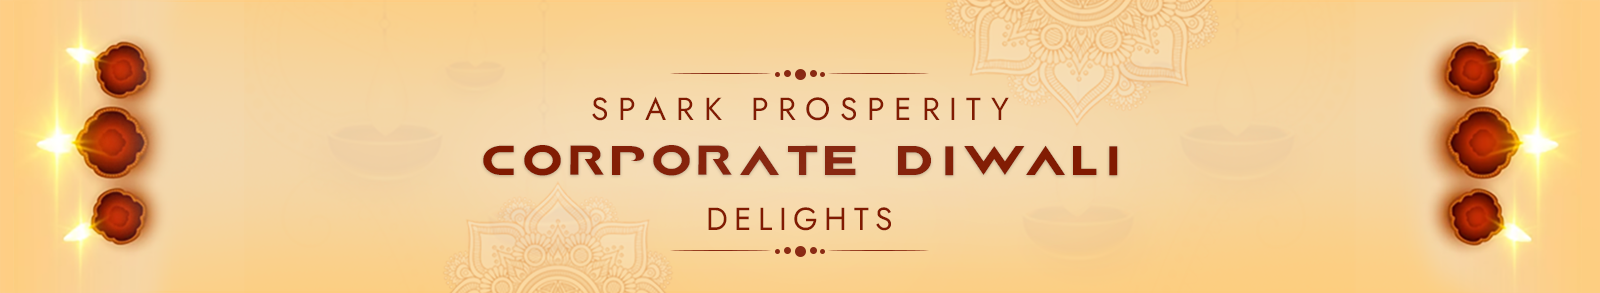 Spark Prosperity Corporate Diwali Delights